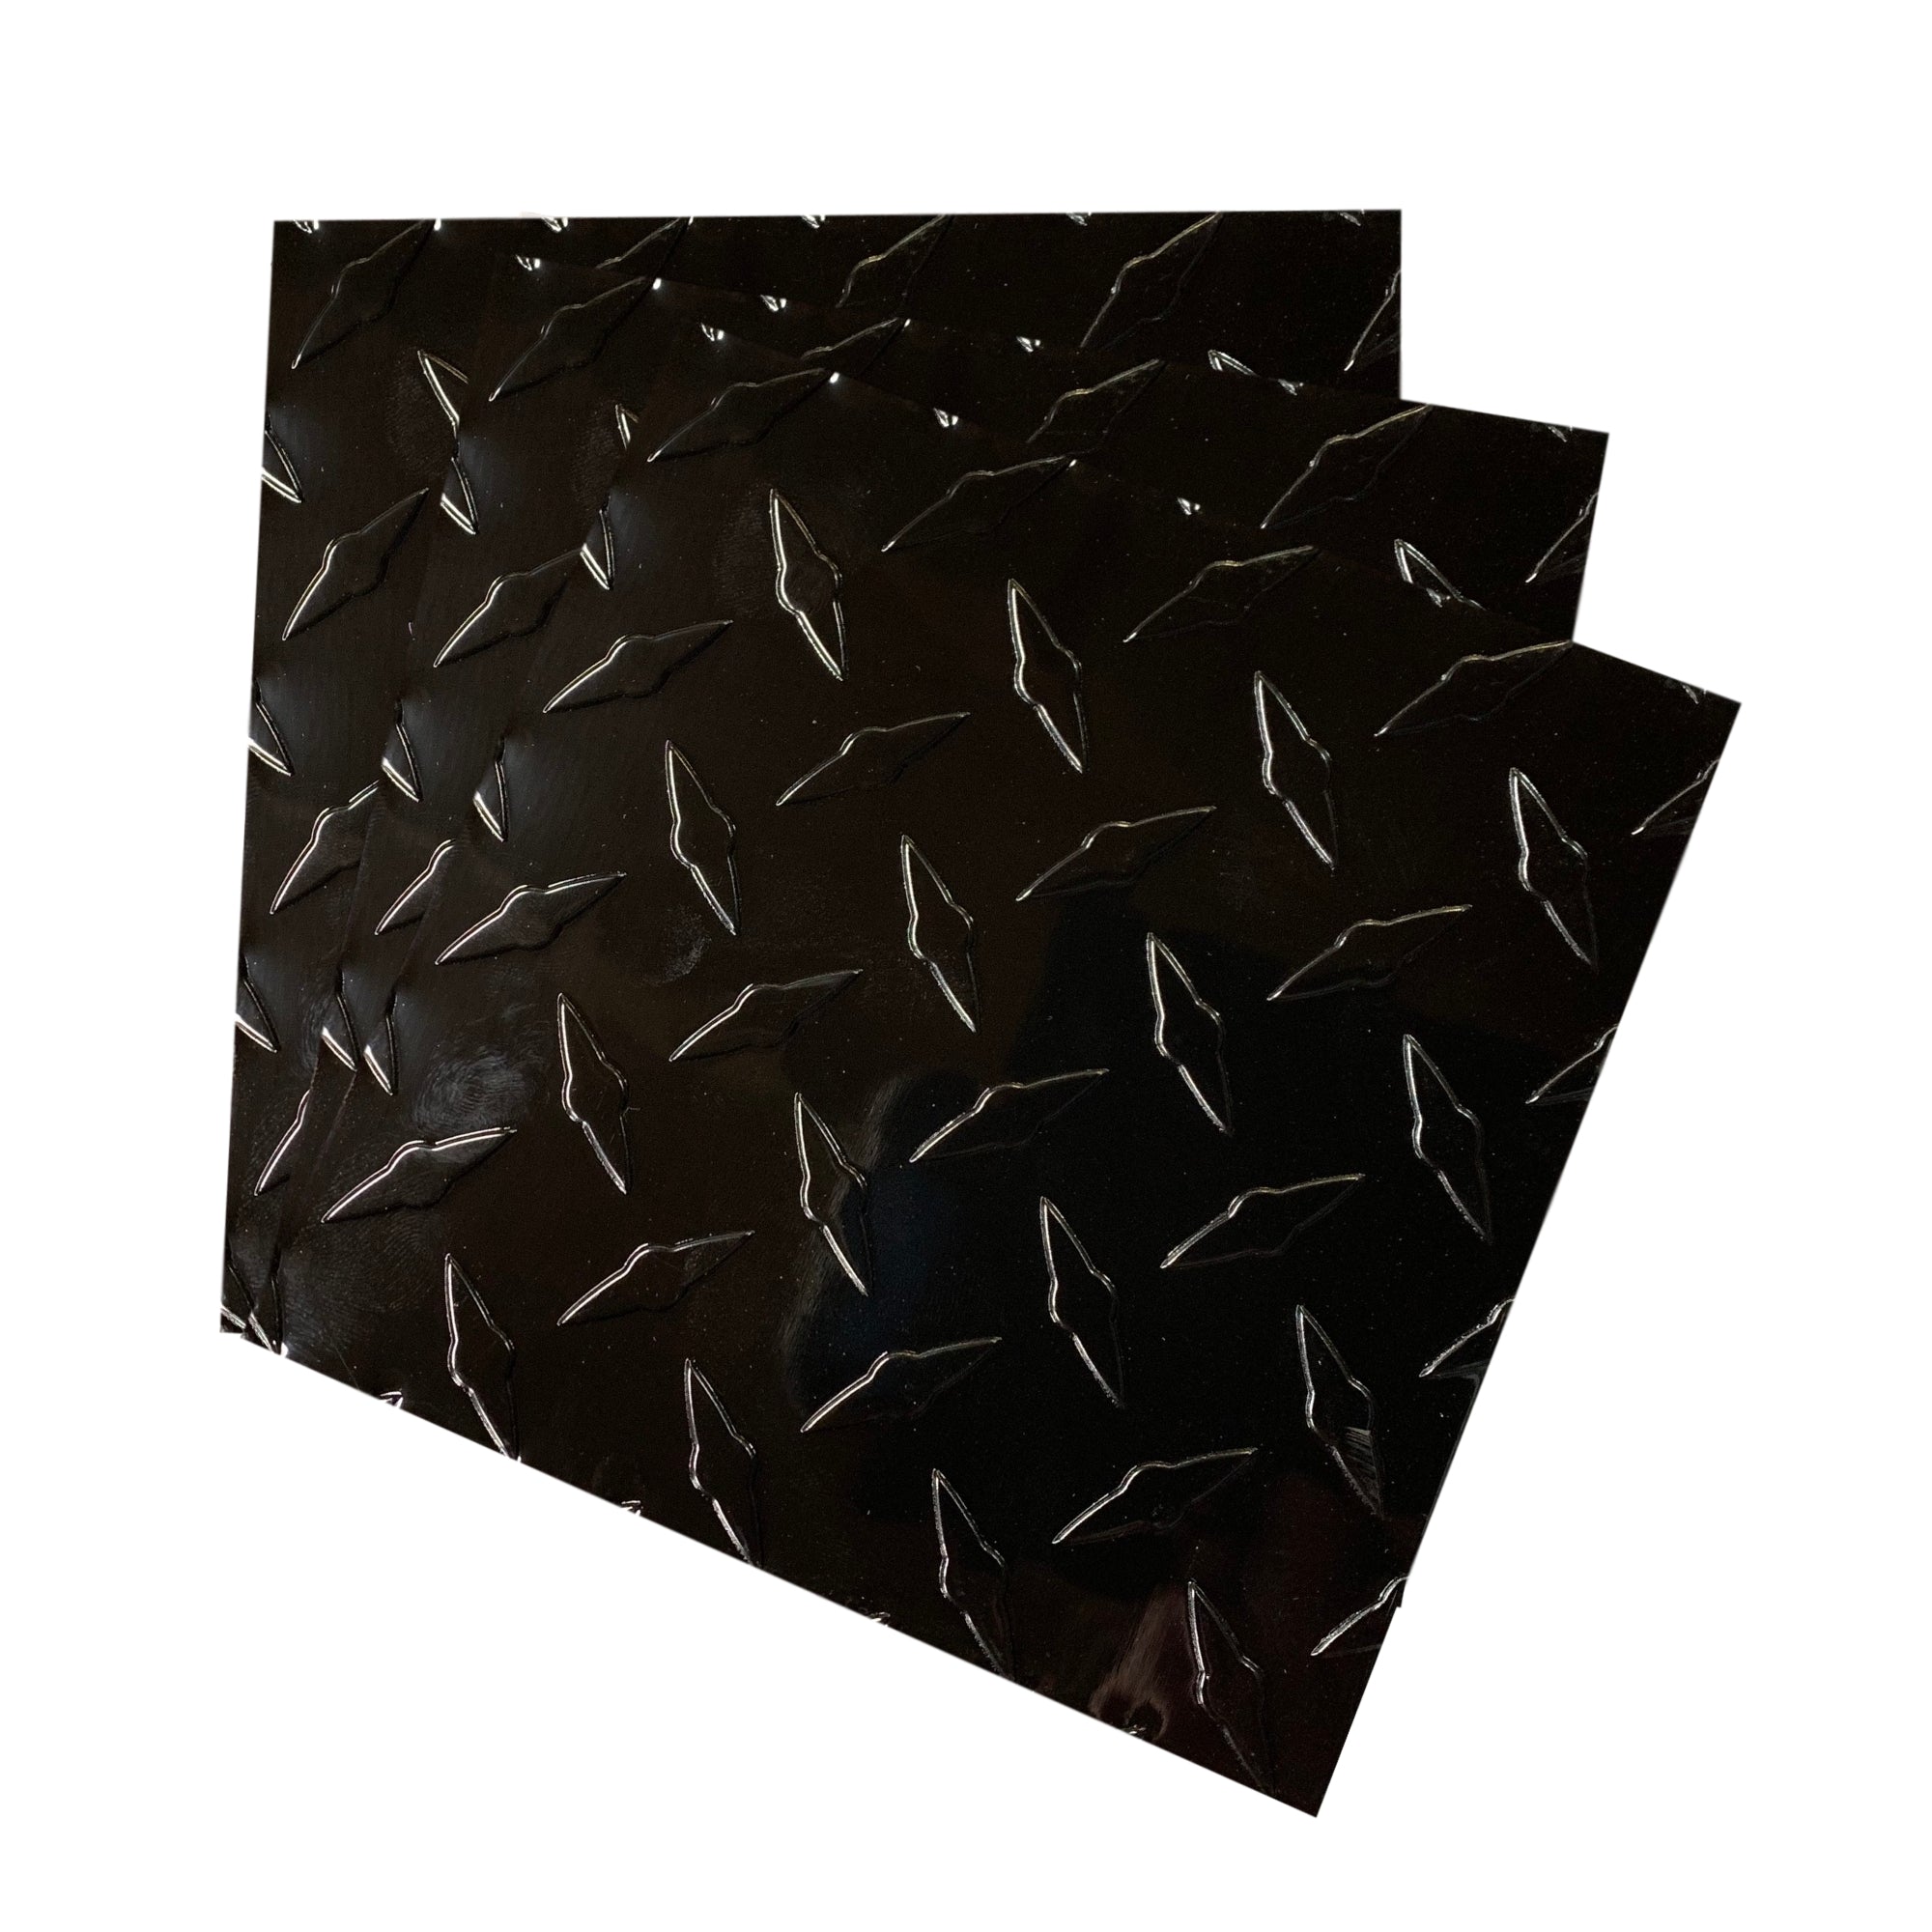 EAGLE 1: 12" x 12" 26 Gauge Sheet Metal Squares (3 Pack Per Order, Multiple Colors)